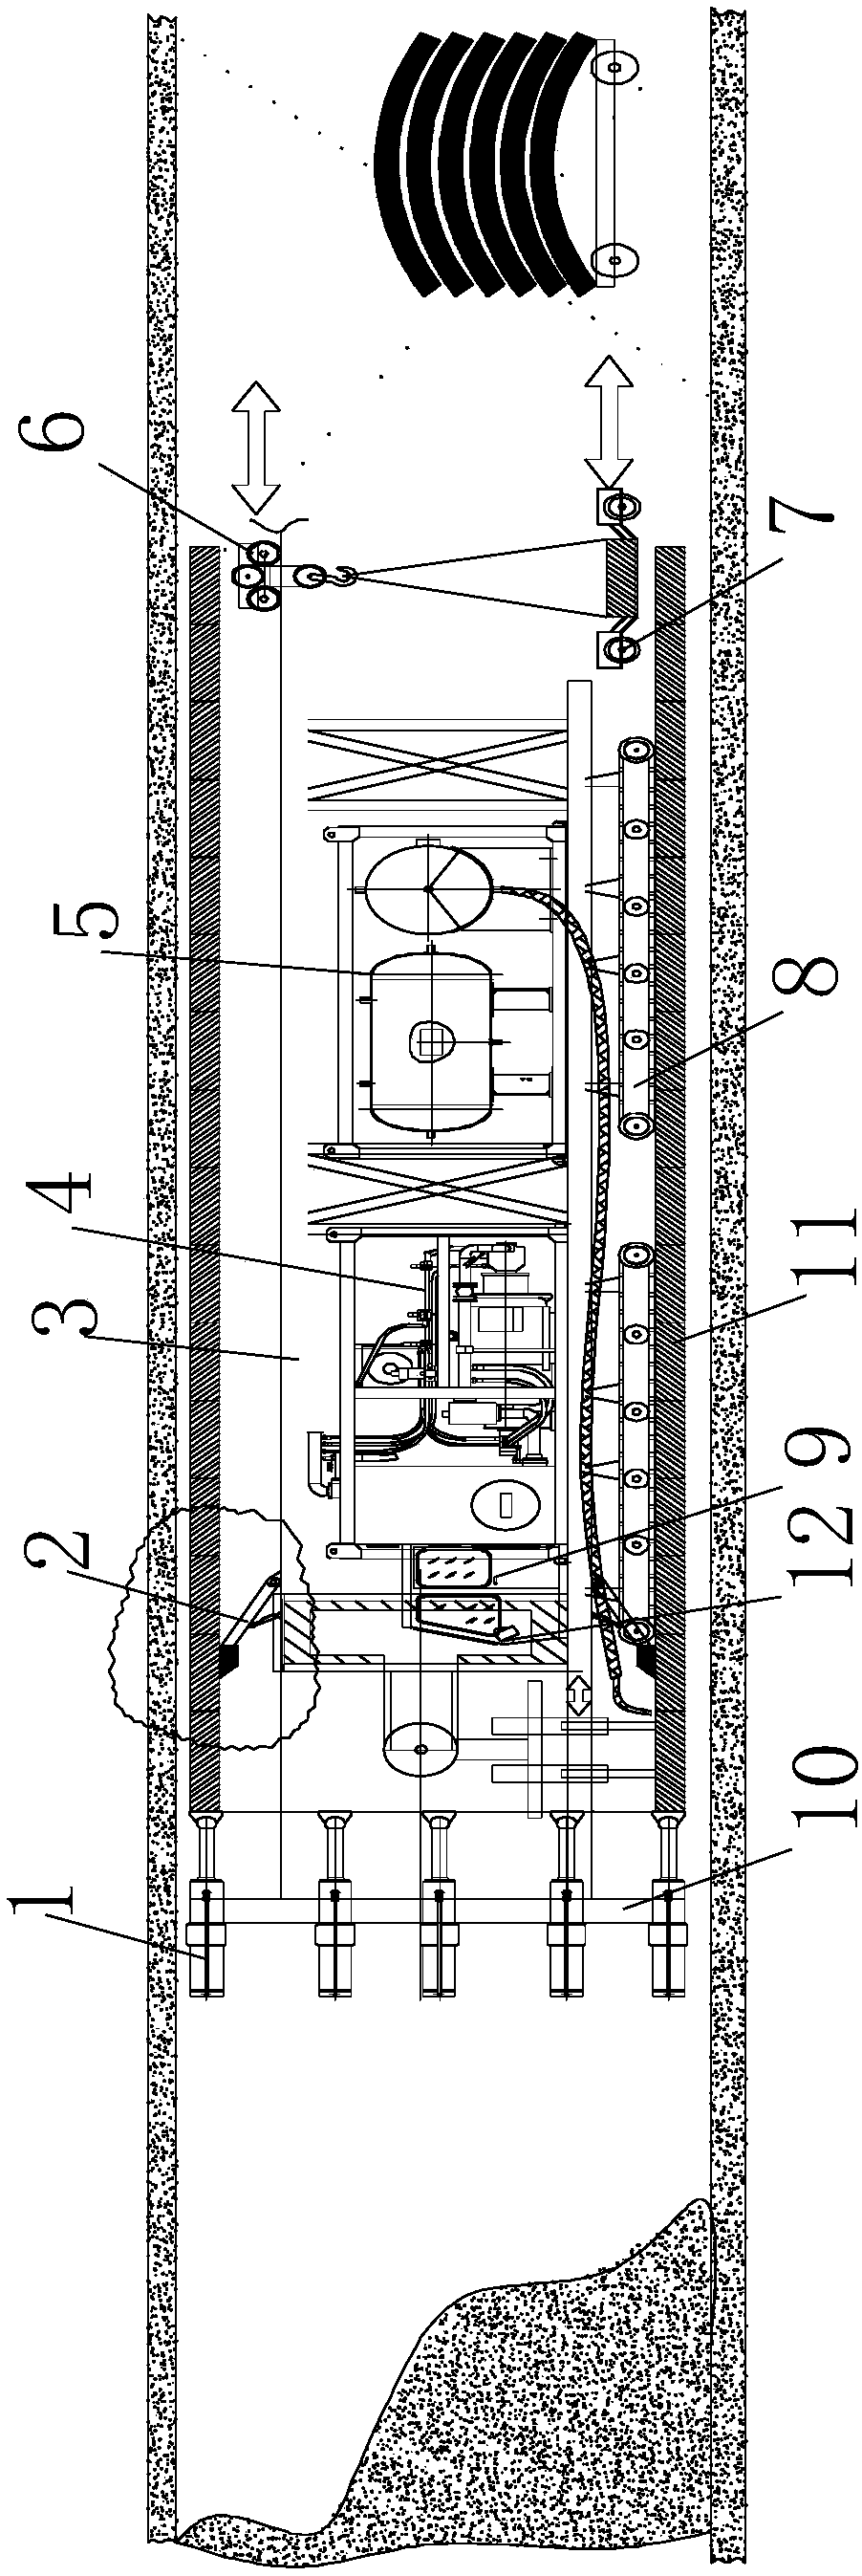 A crawler type segment secondary lining equipment